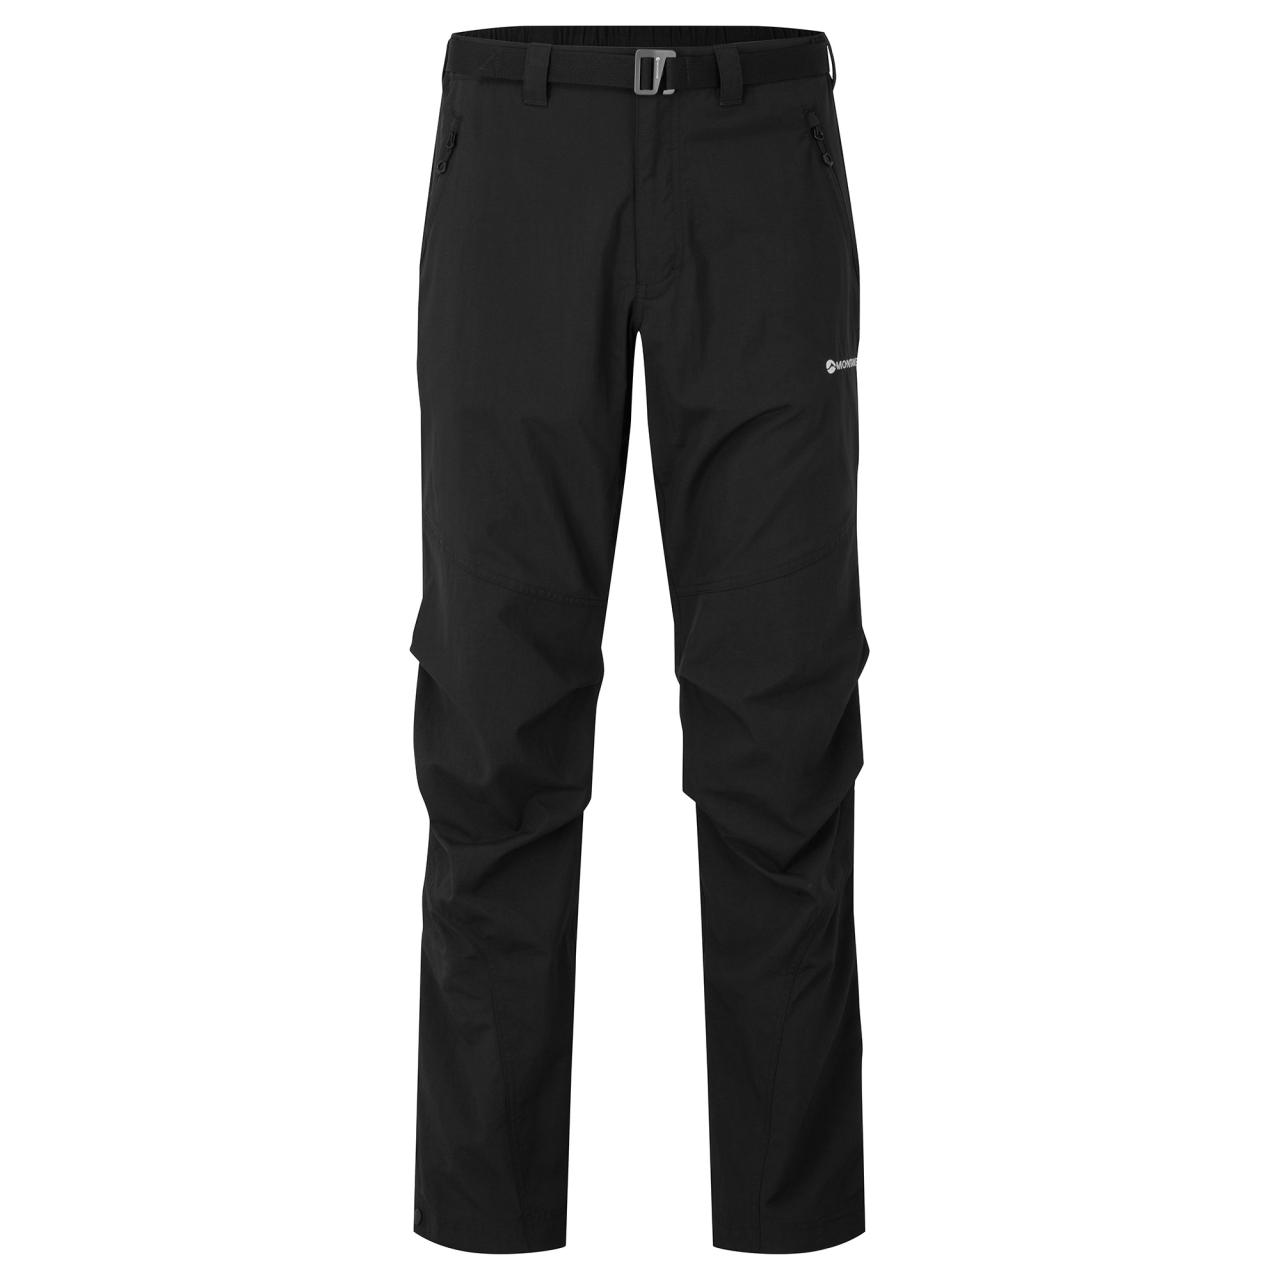 TERRA PANTS SHORT LEG-BLACK-32/M pánské kalhoty černé